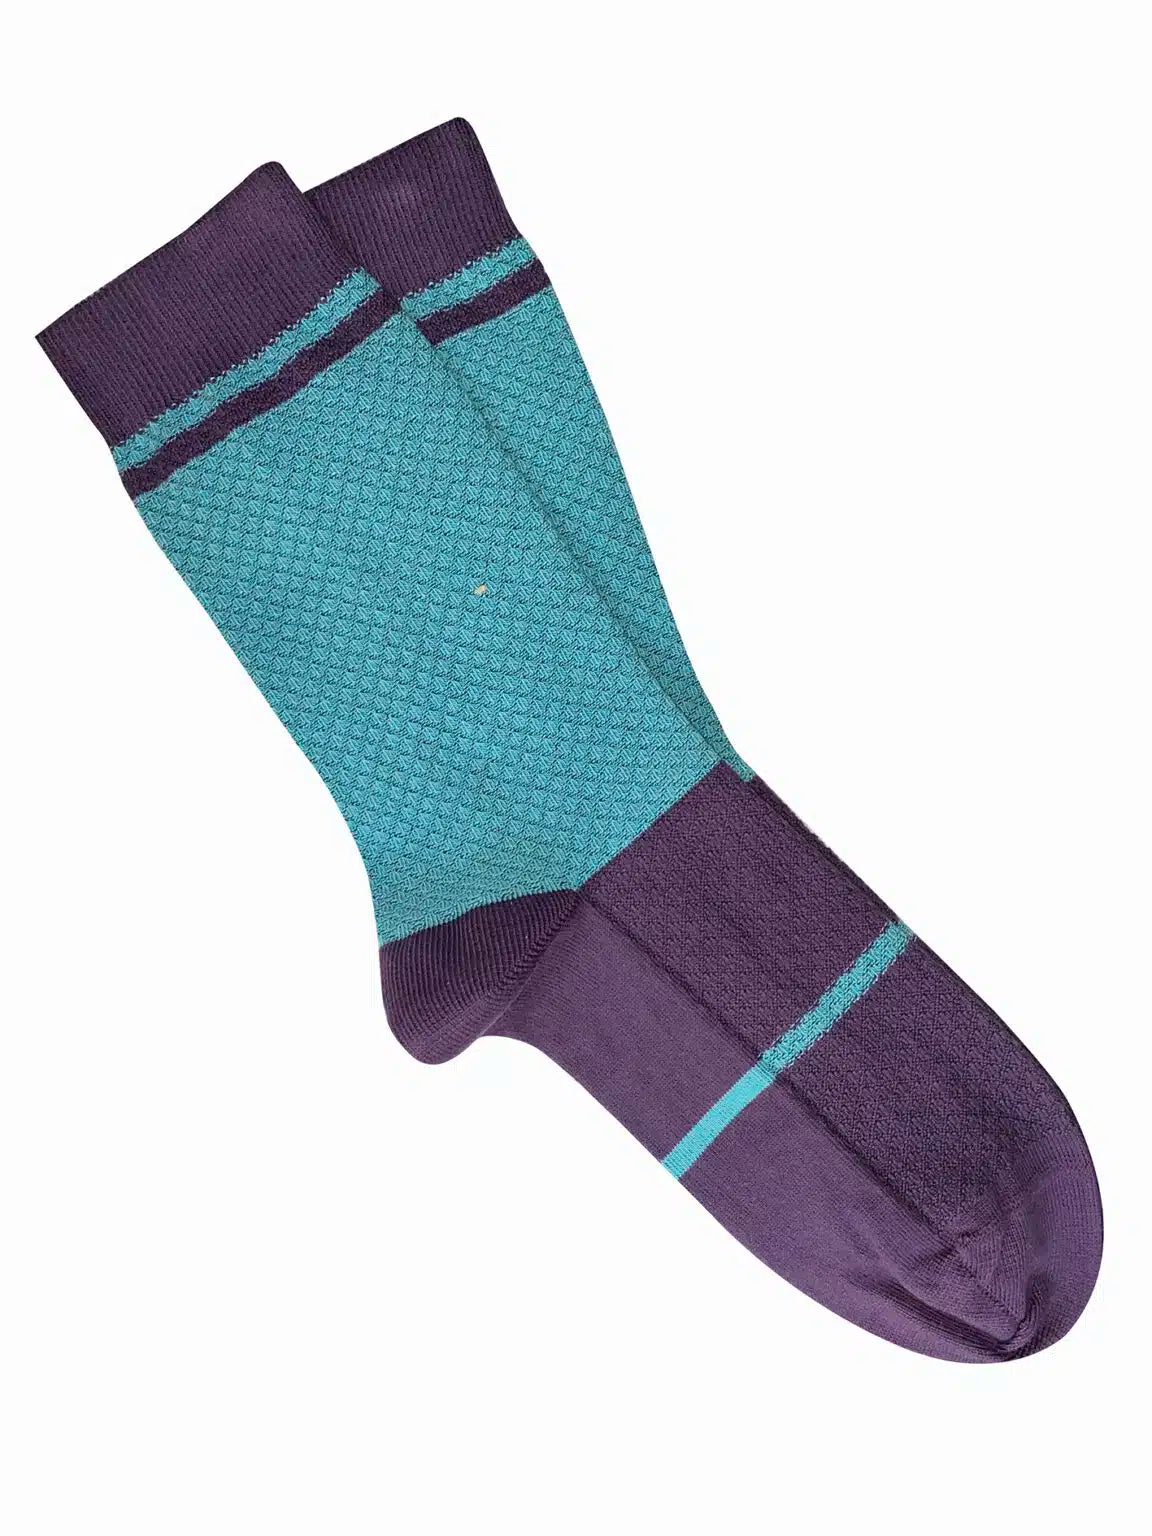 ‘Waffle’ Cotton Socks - Tightology socks Tightology Aqua/Plum 